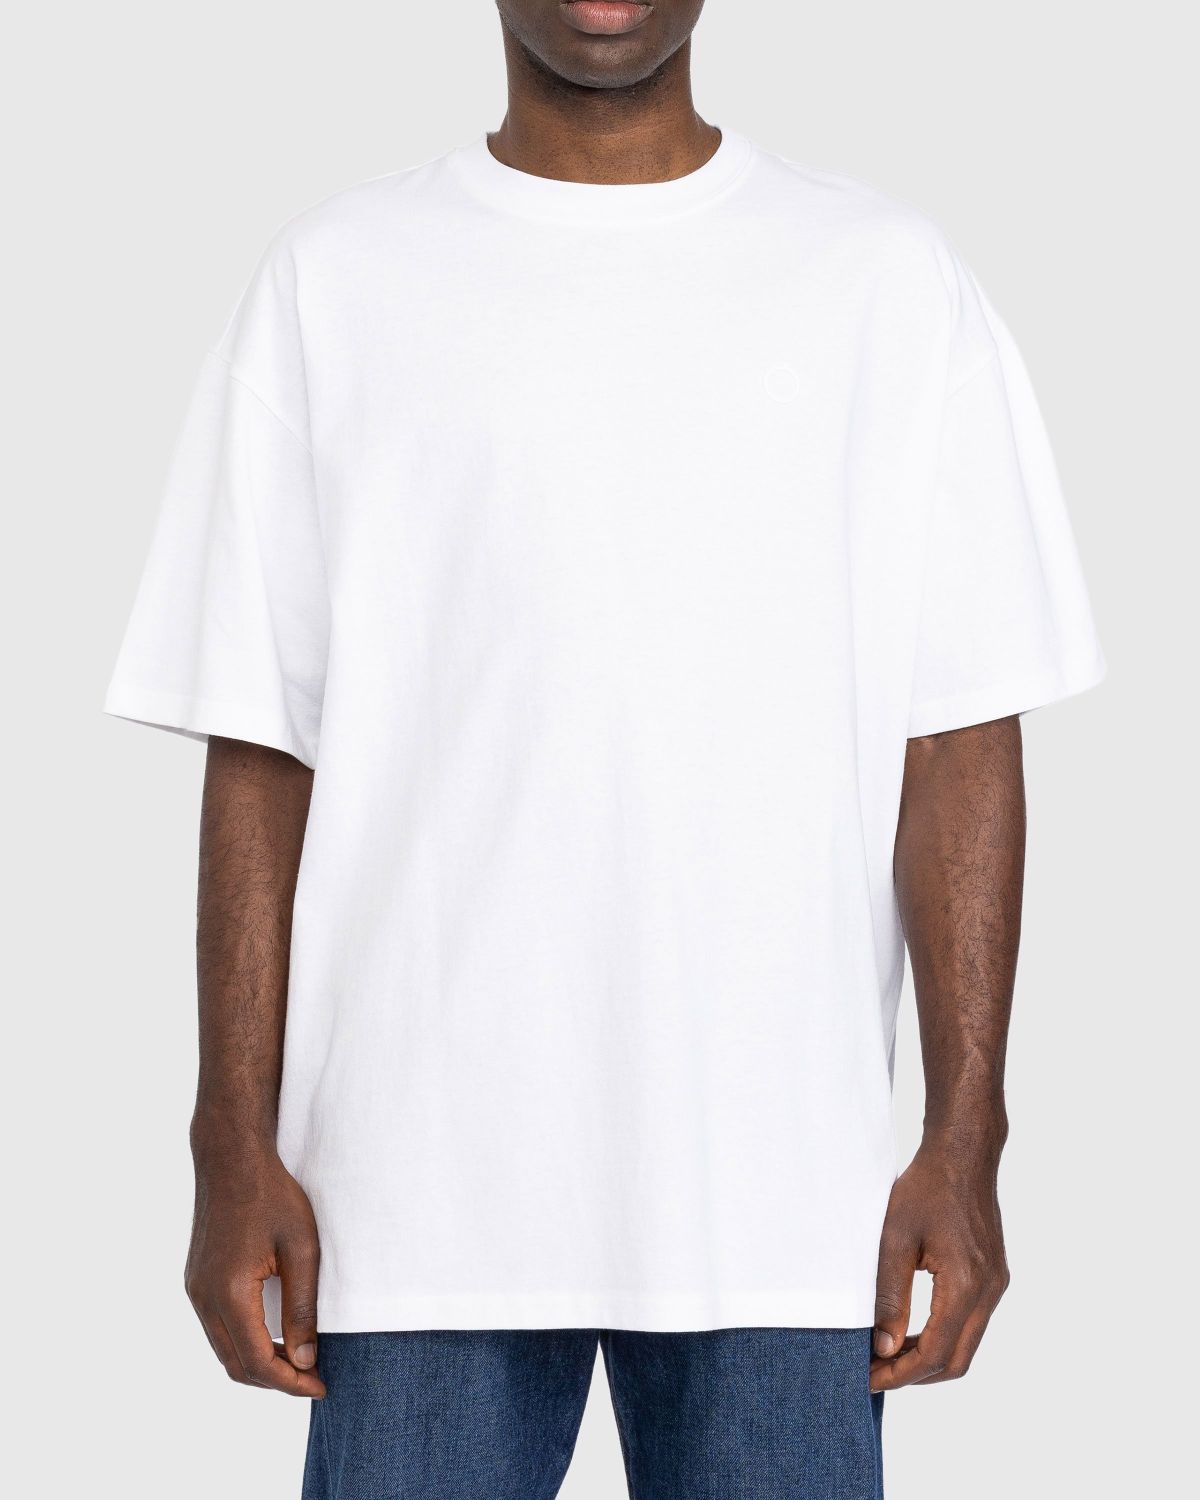 Trussardi – Greyhound T-Shirt White - T-Shirts - White - Image 2